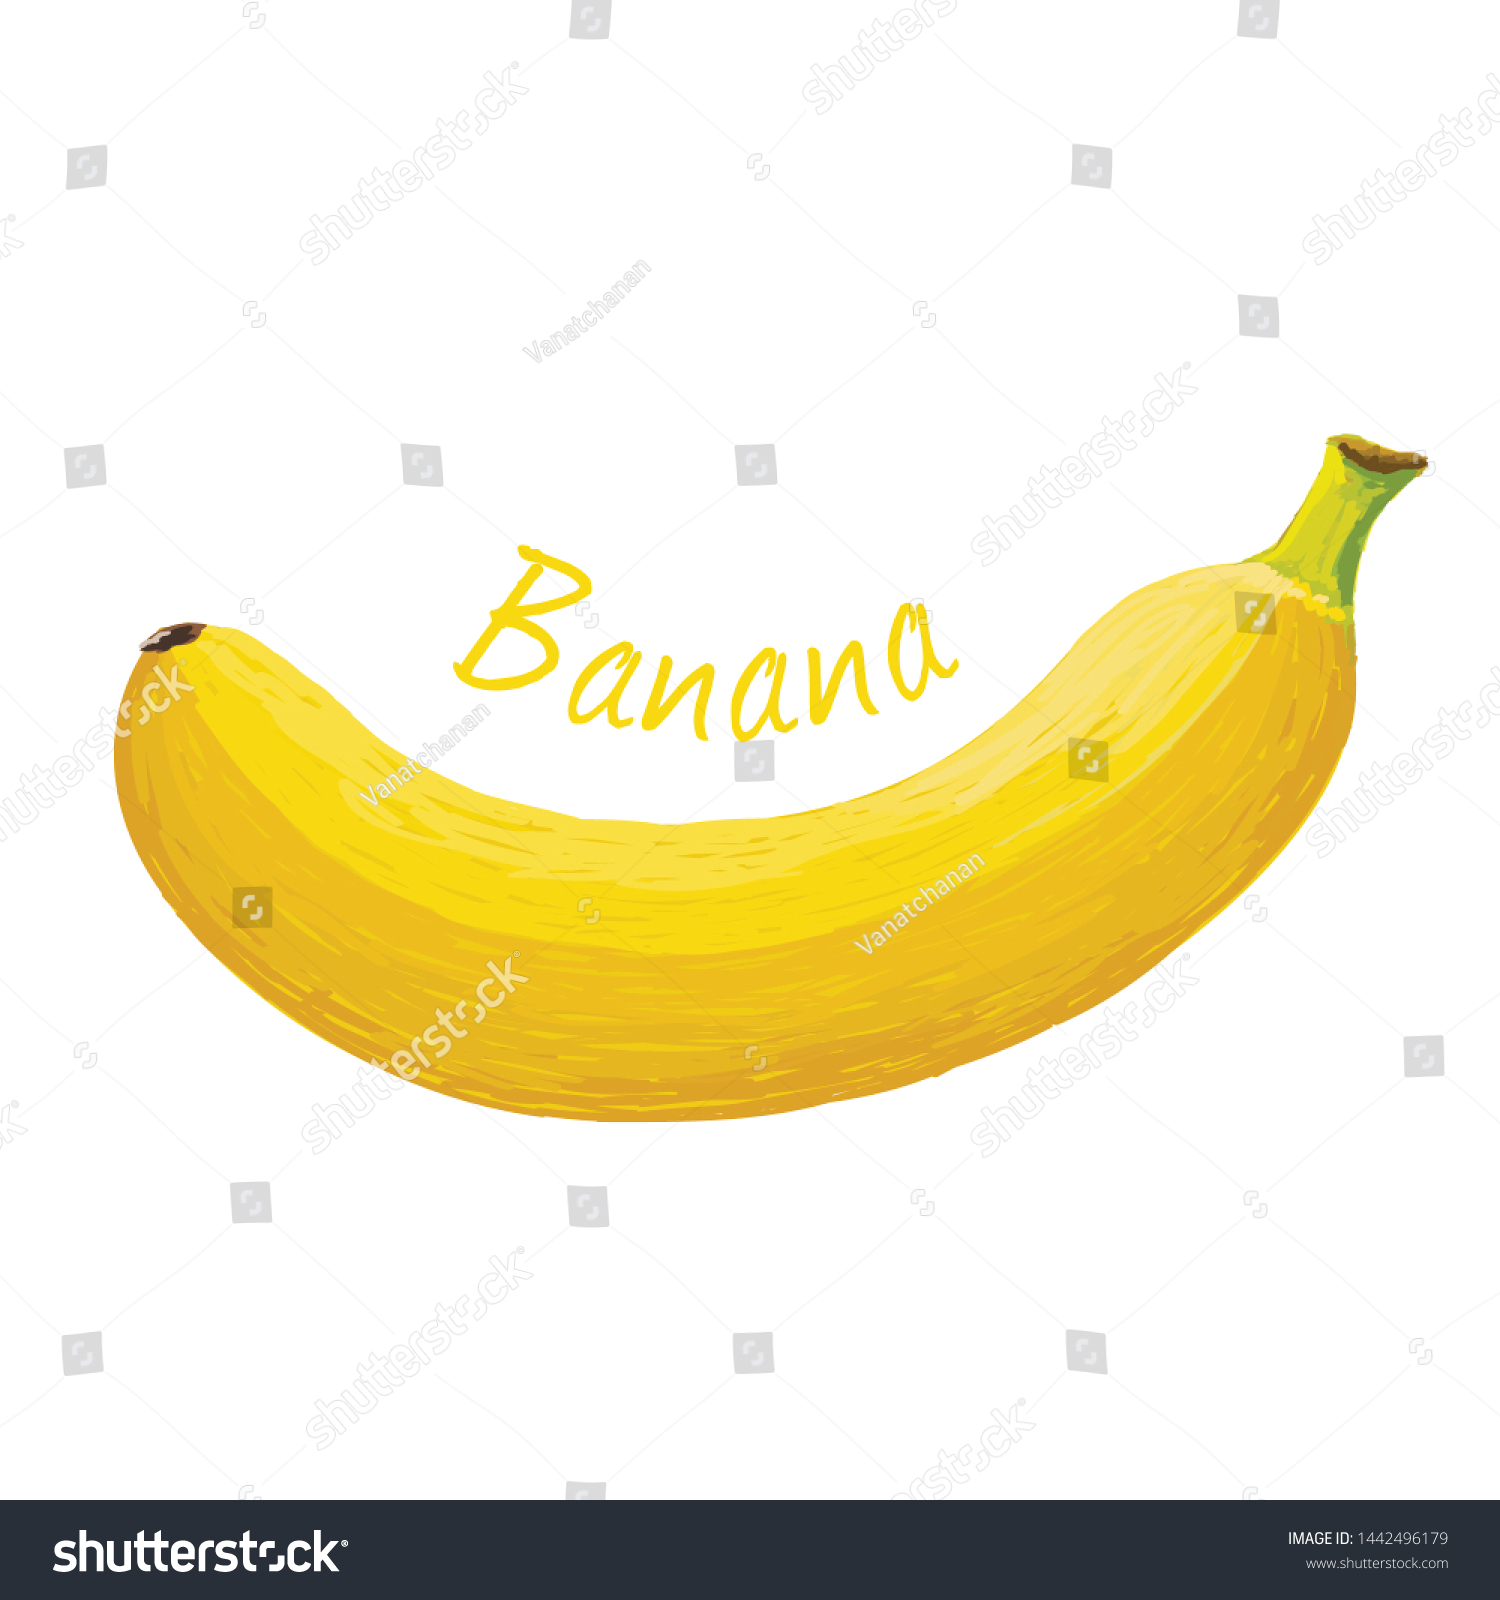 Banana Fruit Doodle Drawings Vector Illustration Stock Vector Royalty Free